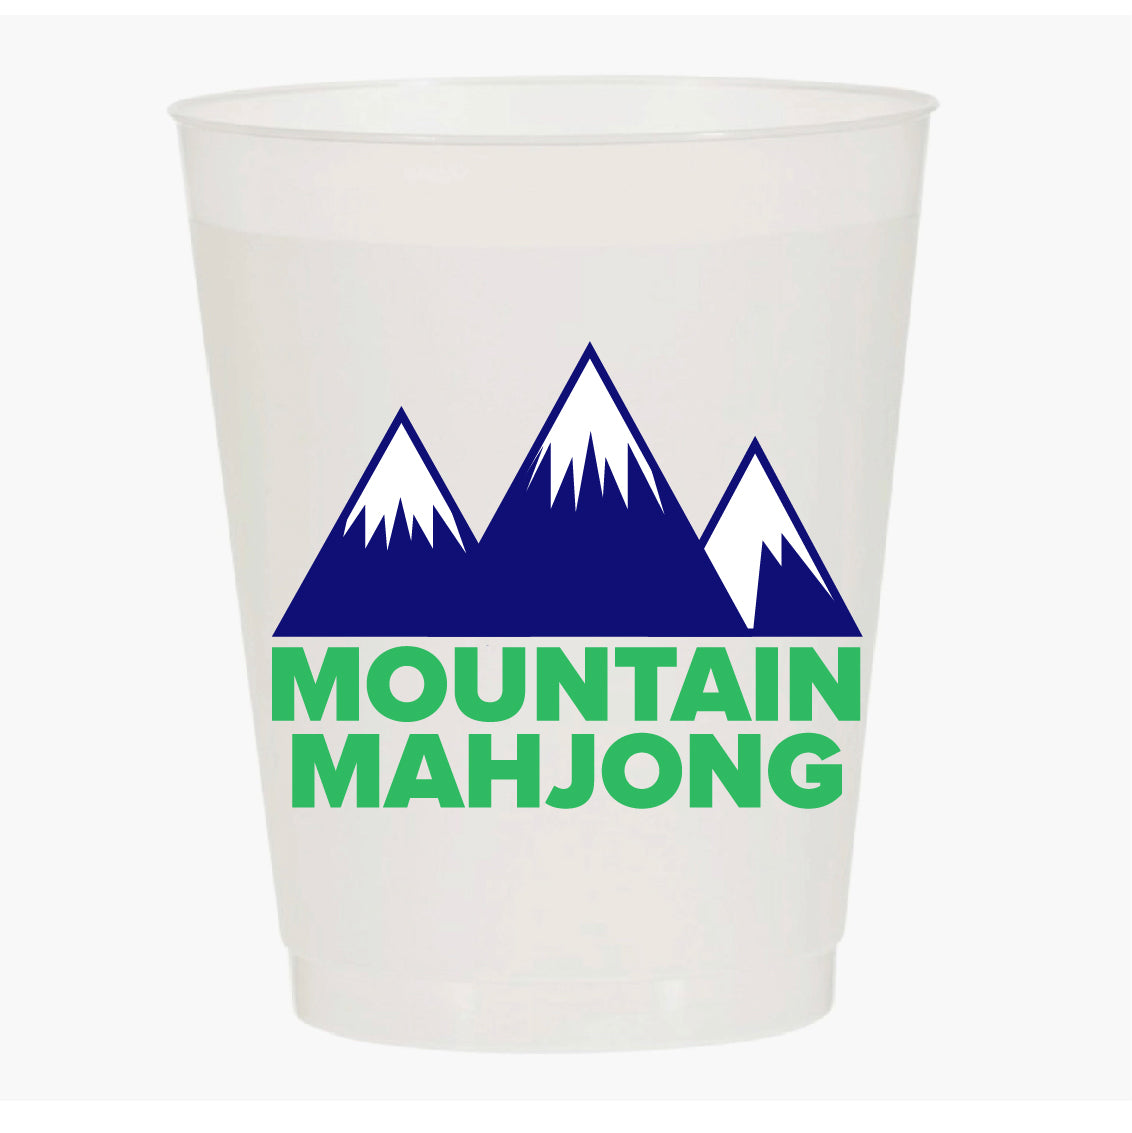 “MOUNTAIN MAHJONG” FROST FLEX CUPS